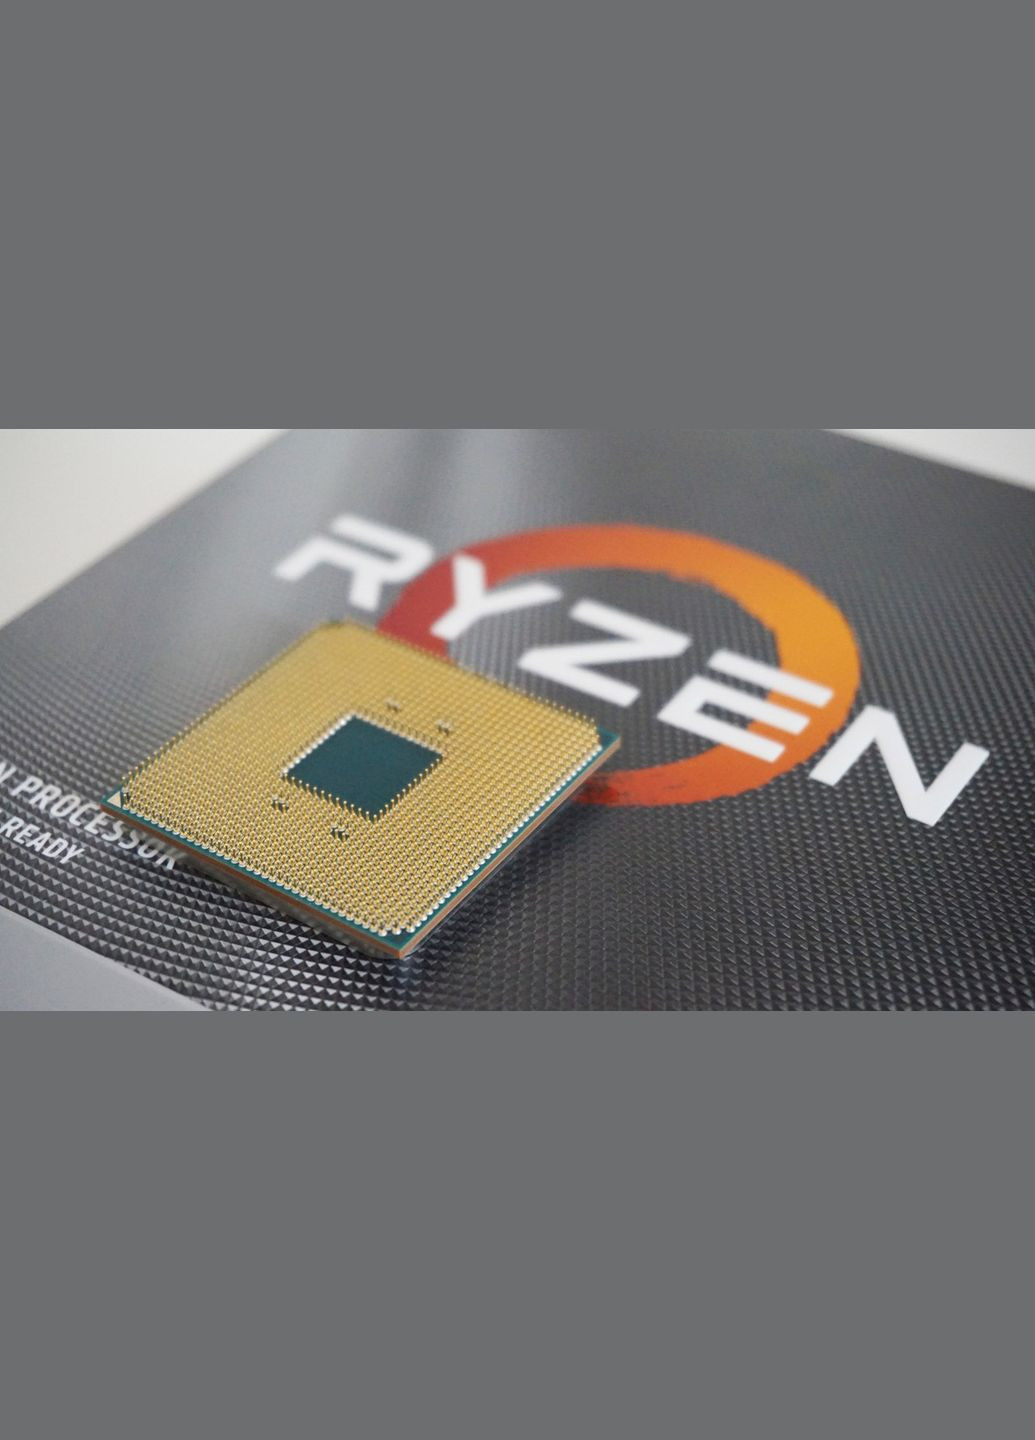 Процесор AMD (279553746)